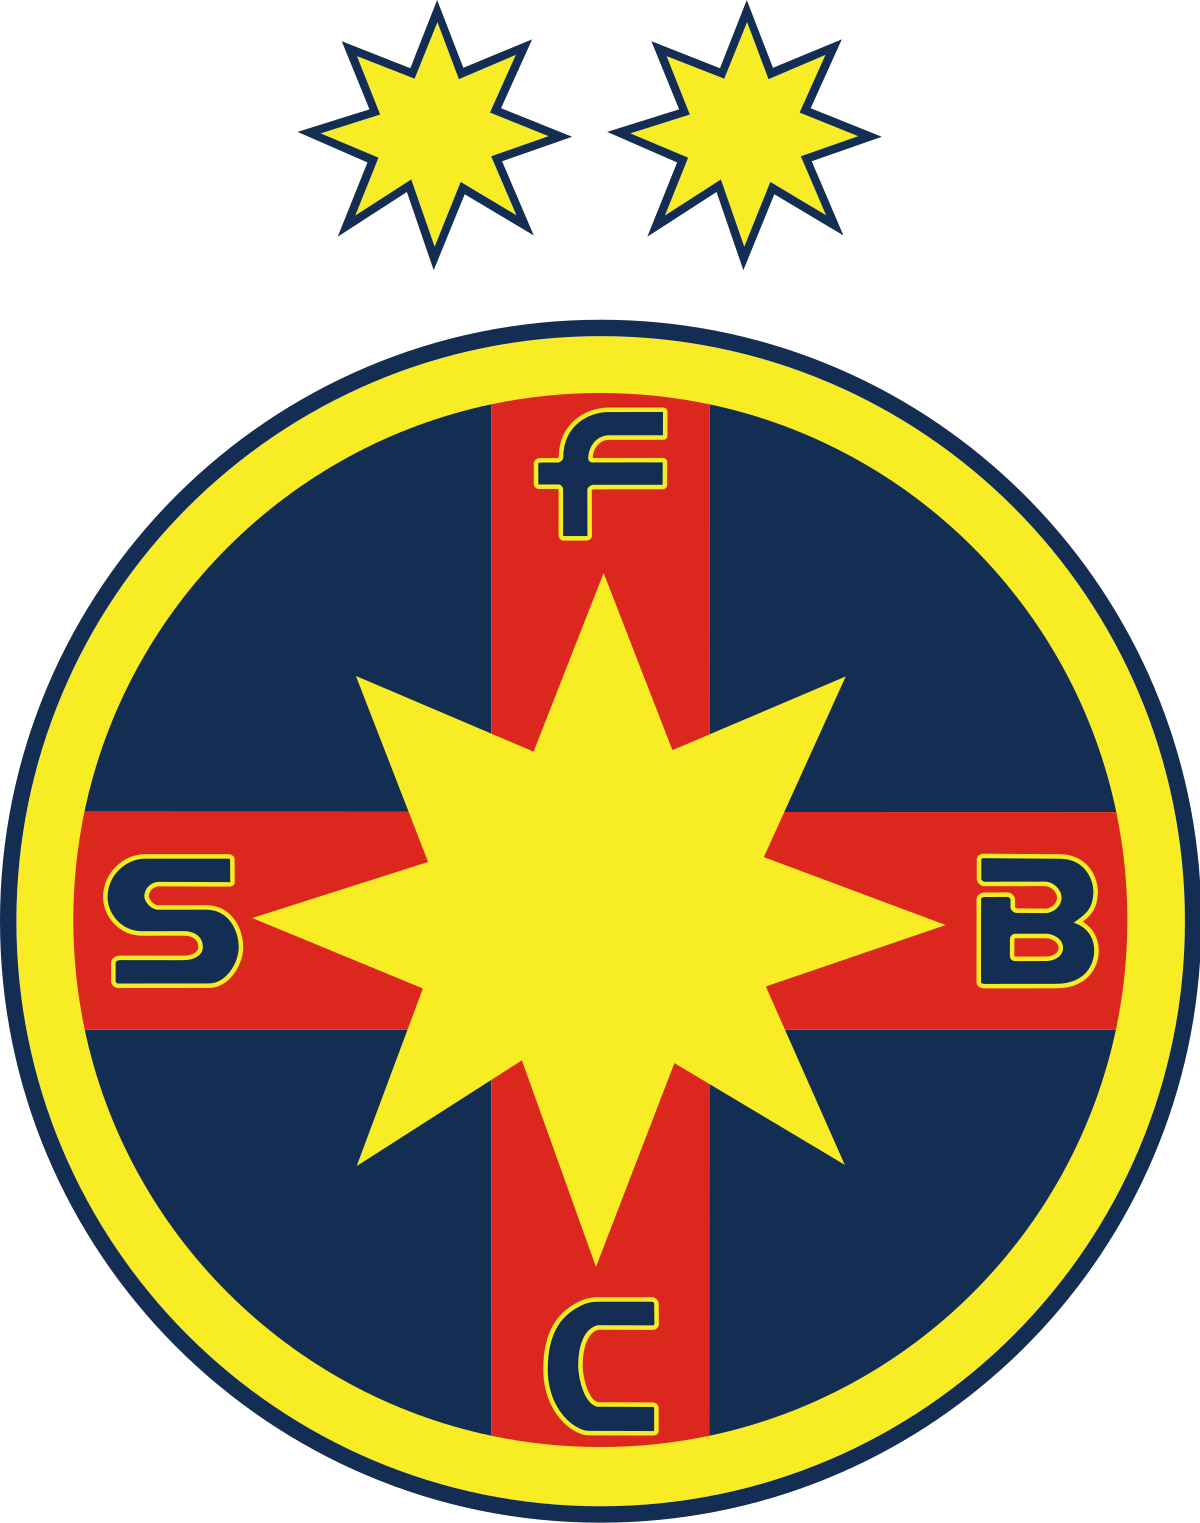 FCSB II - Wikipedia